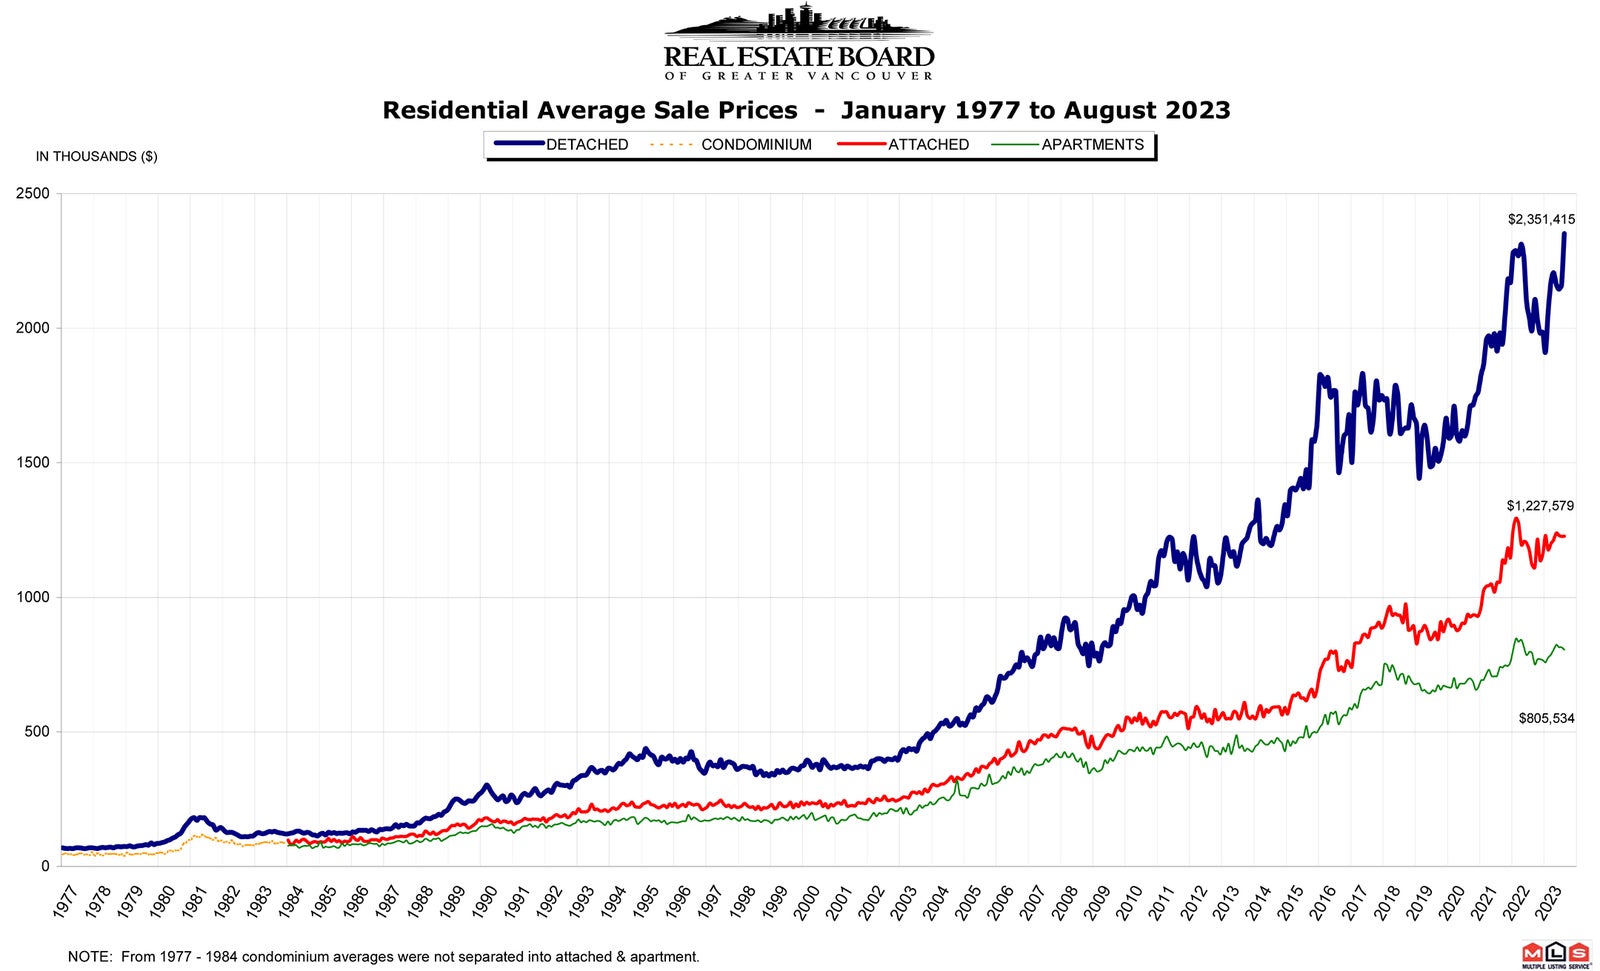 Residential Average Sale Price RASP August 2023 Real Estate Vancouver Chris Frederickson